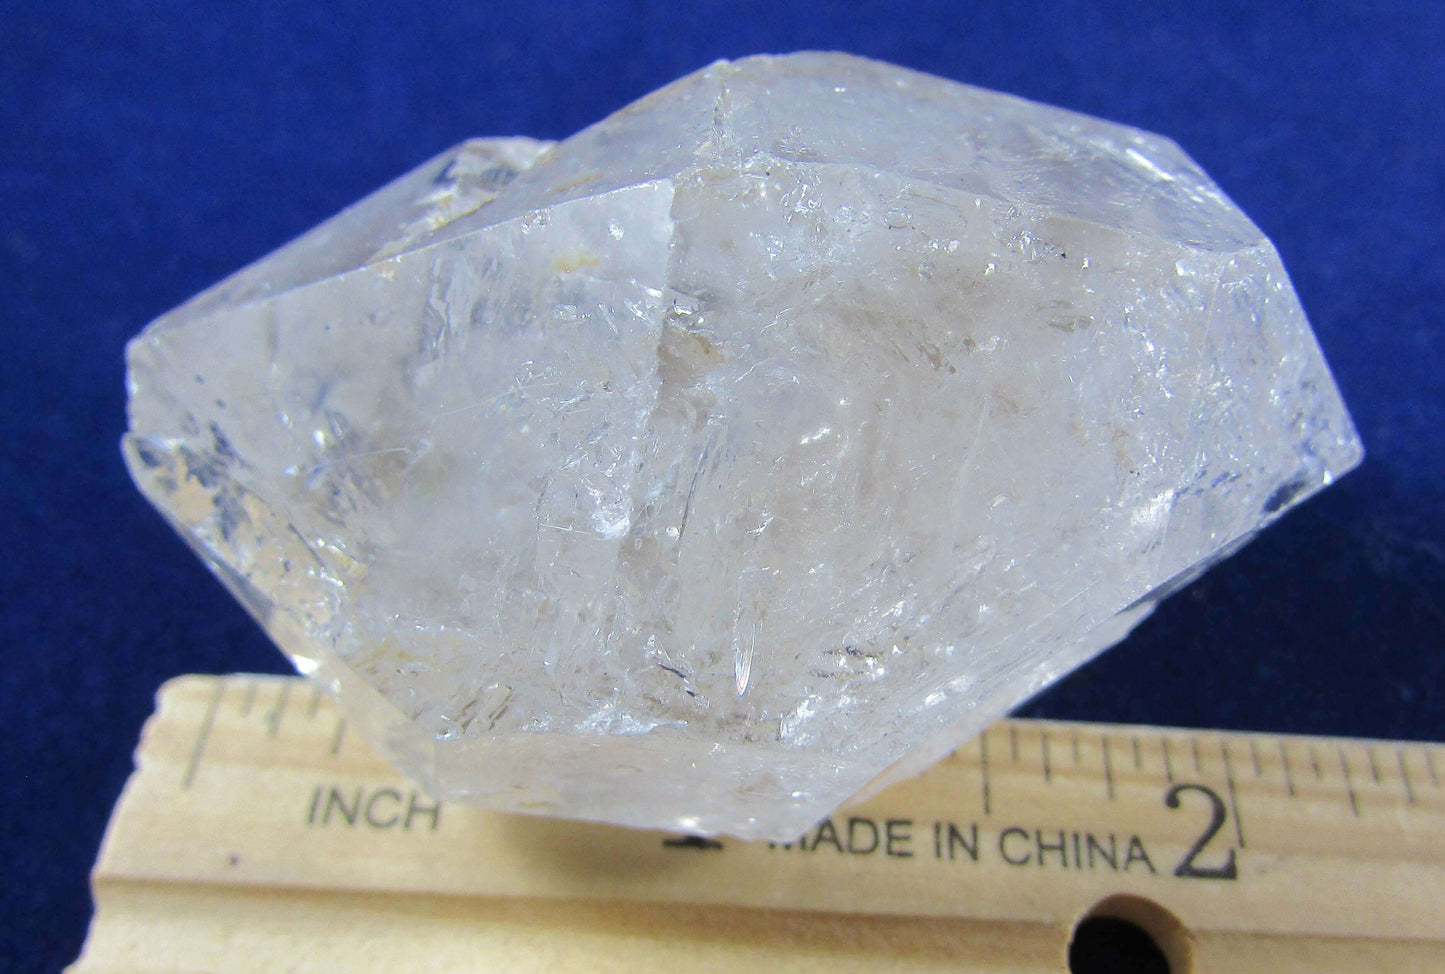 Natural Double Terminated Fenster Quartz, Mexico Mineral